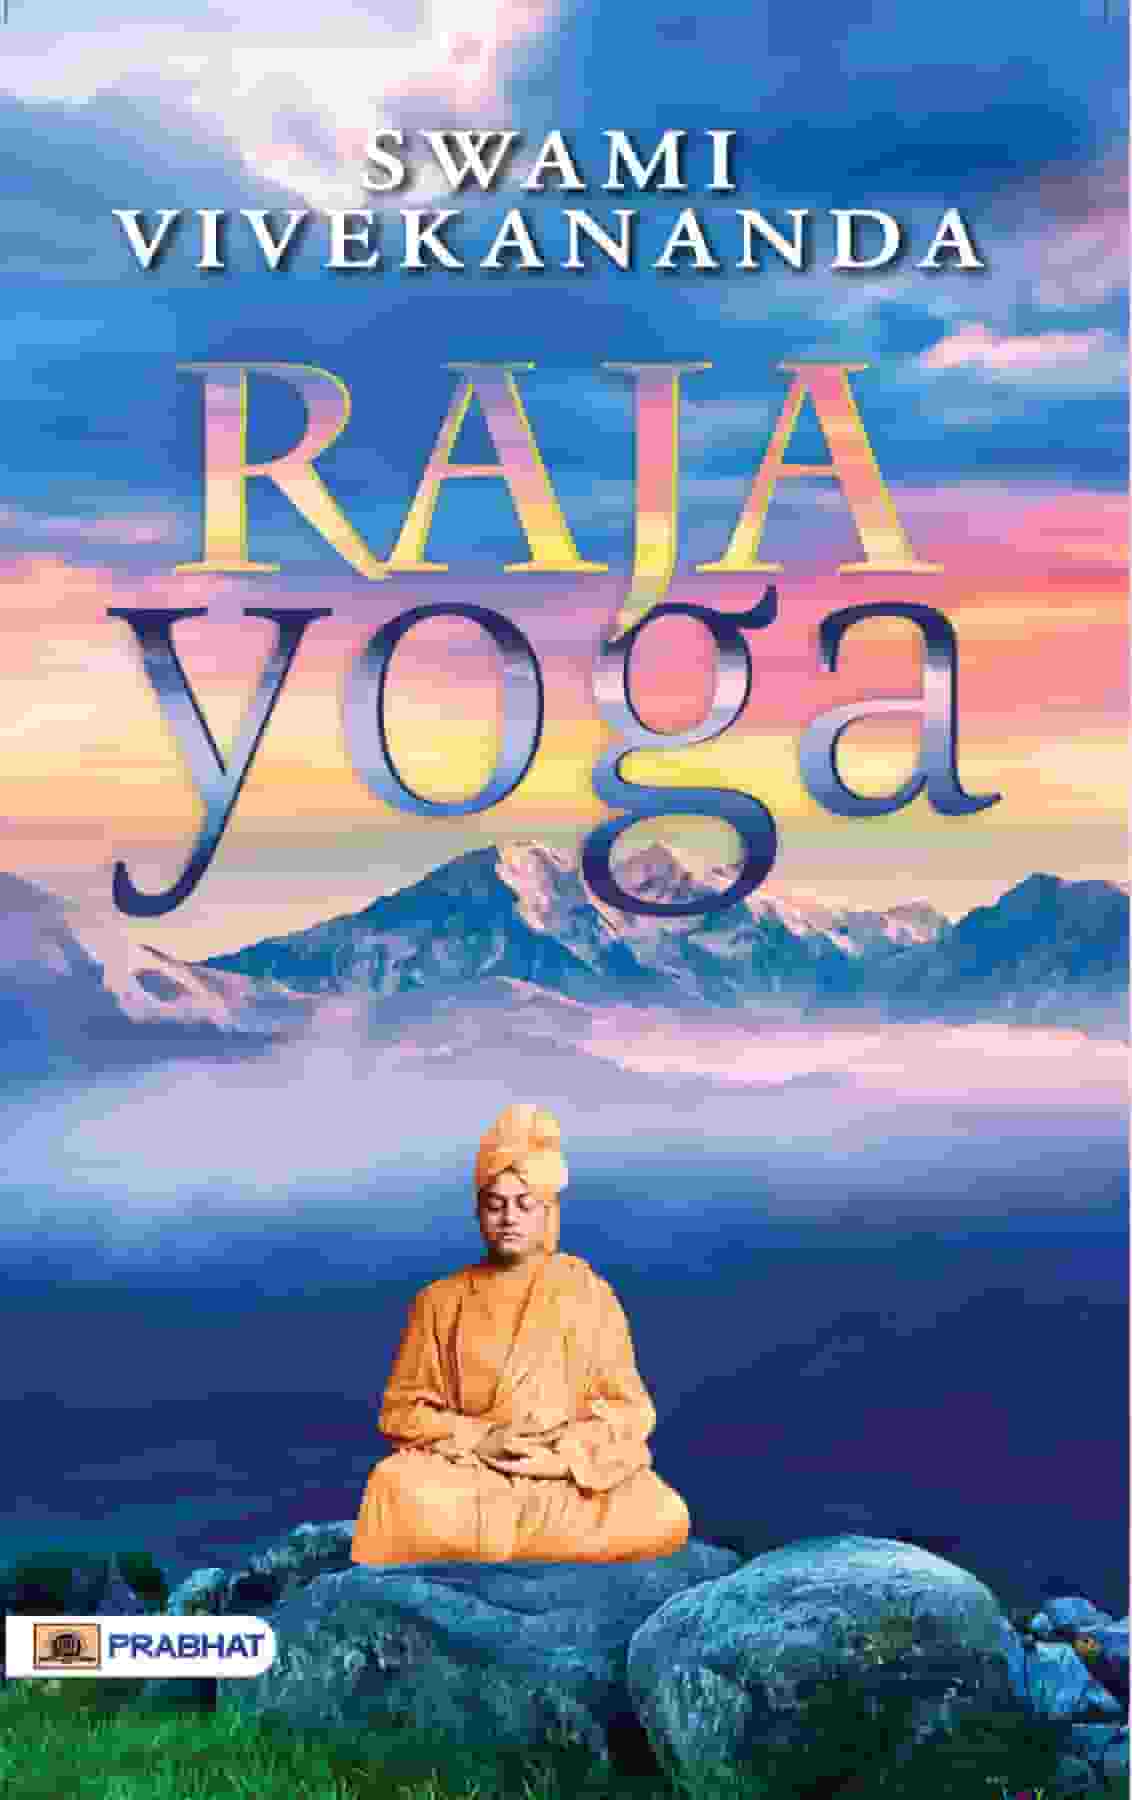 Raja Yoga - The Best Yoga School in Rishikesh | Sanatana Yog Sandesh